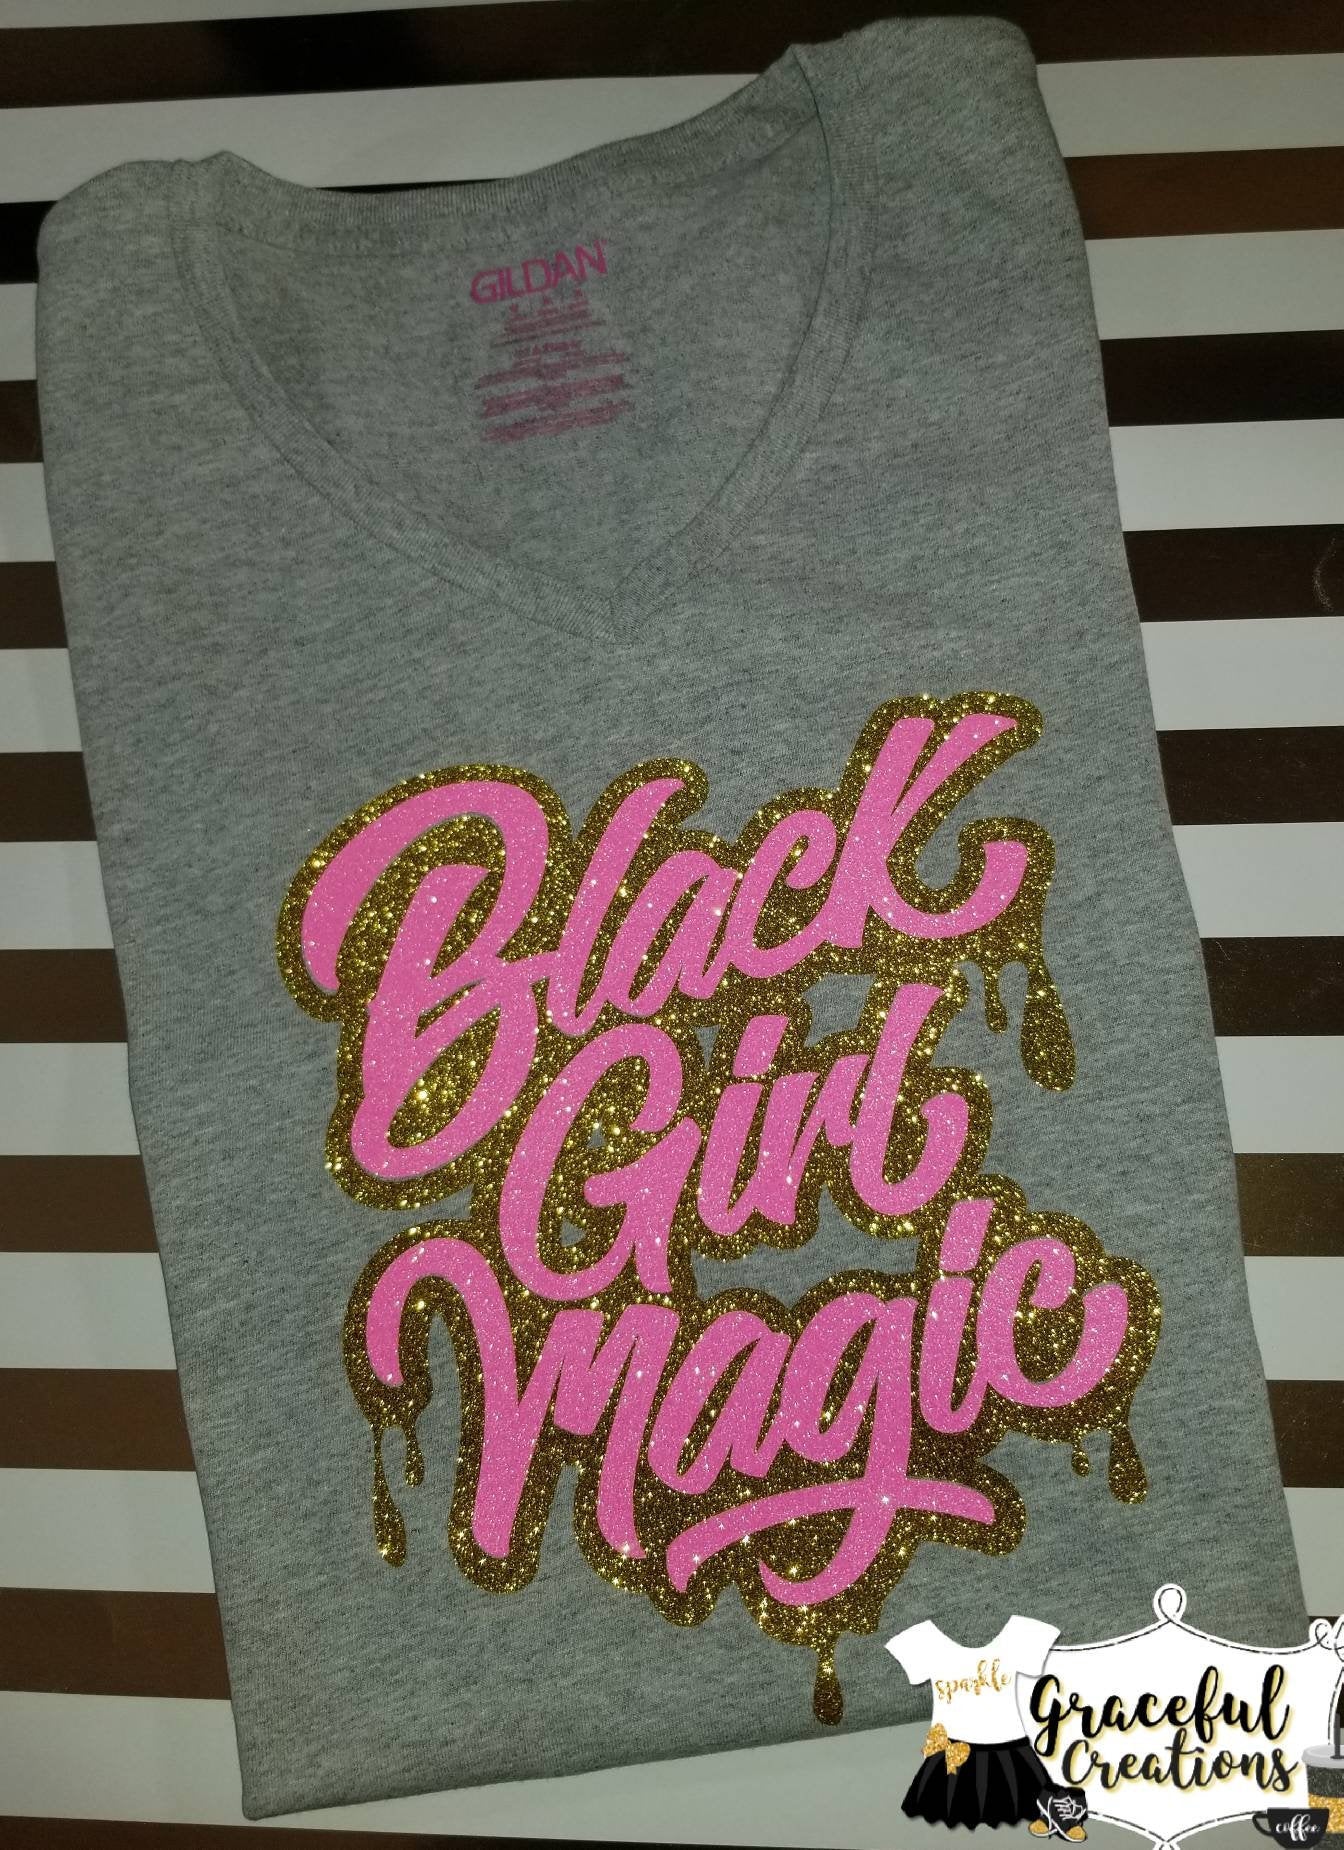 Black Girl Magic Graffiti, African Queen, African-American, Melanin, Personalized, Custom T-Shirt